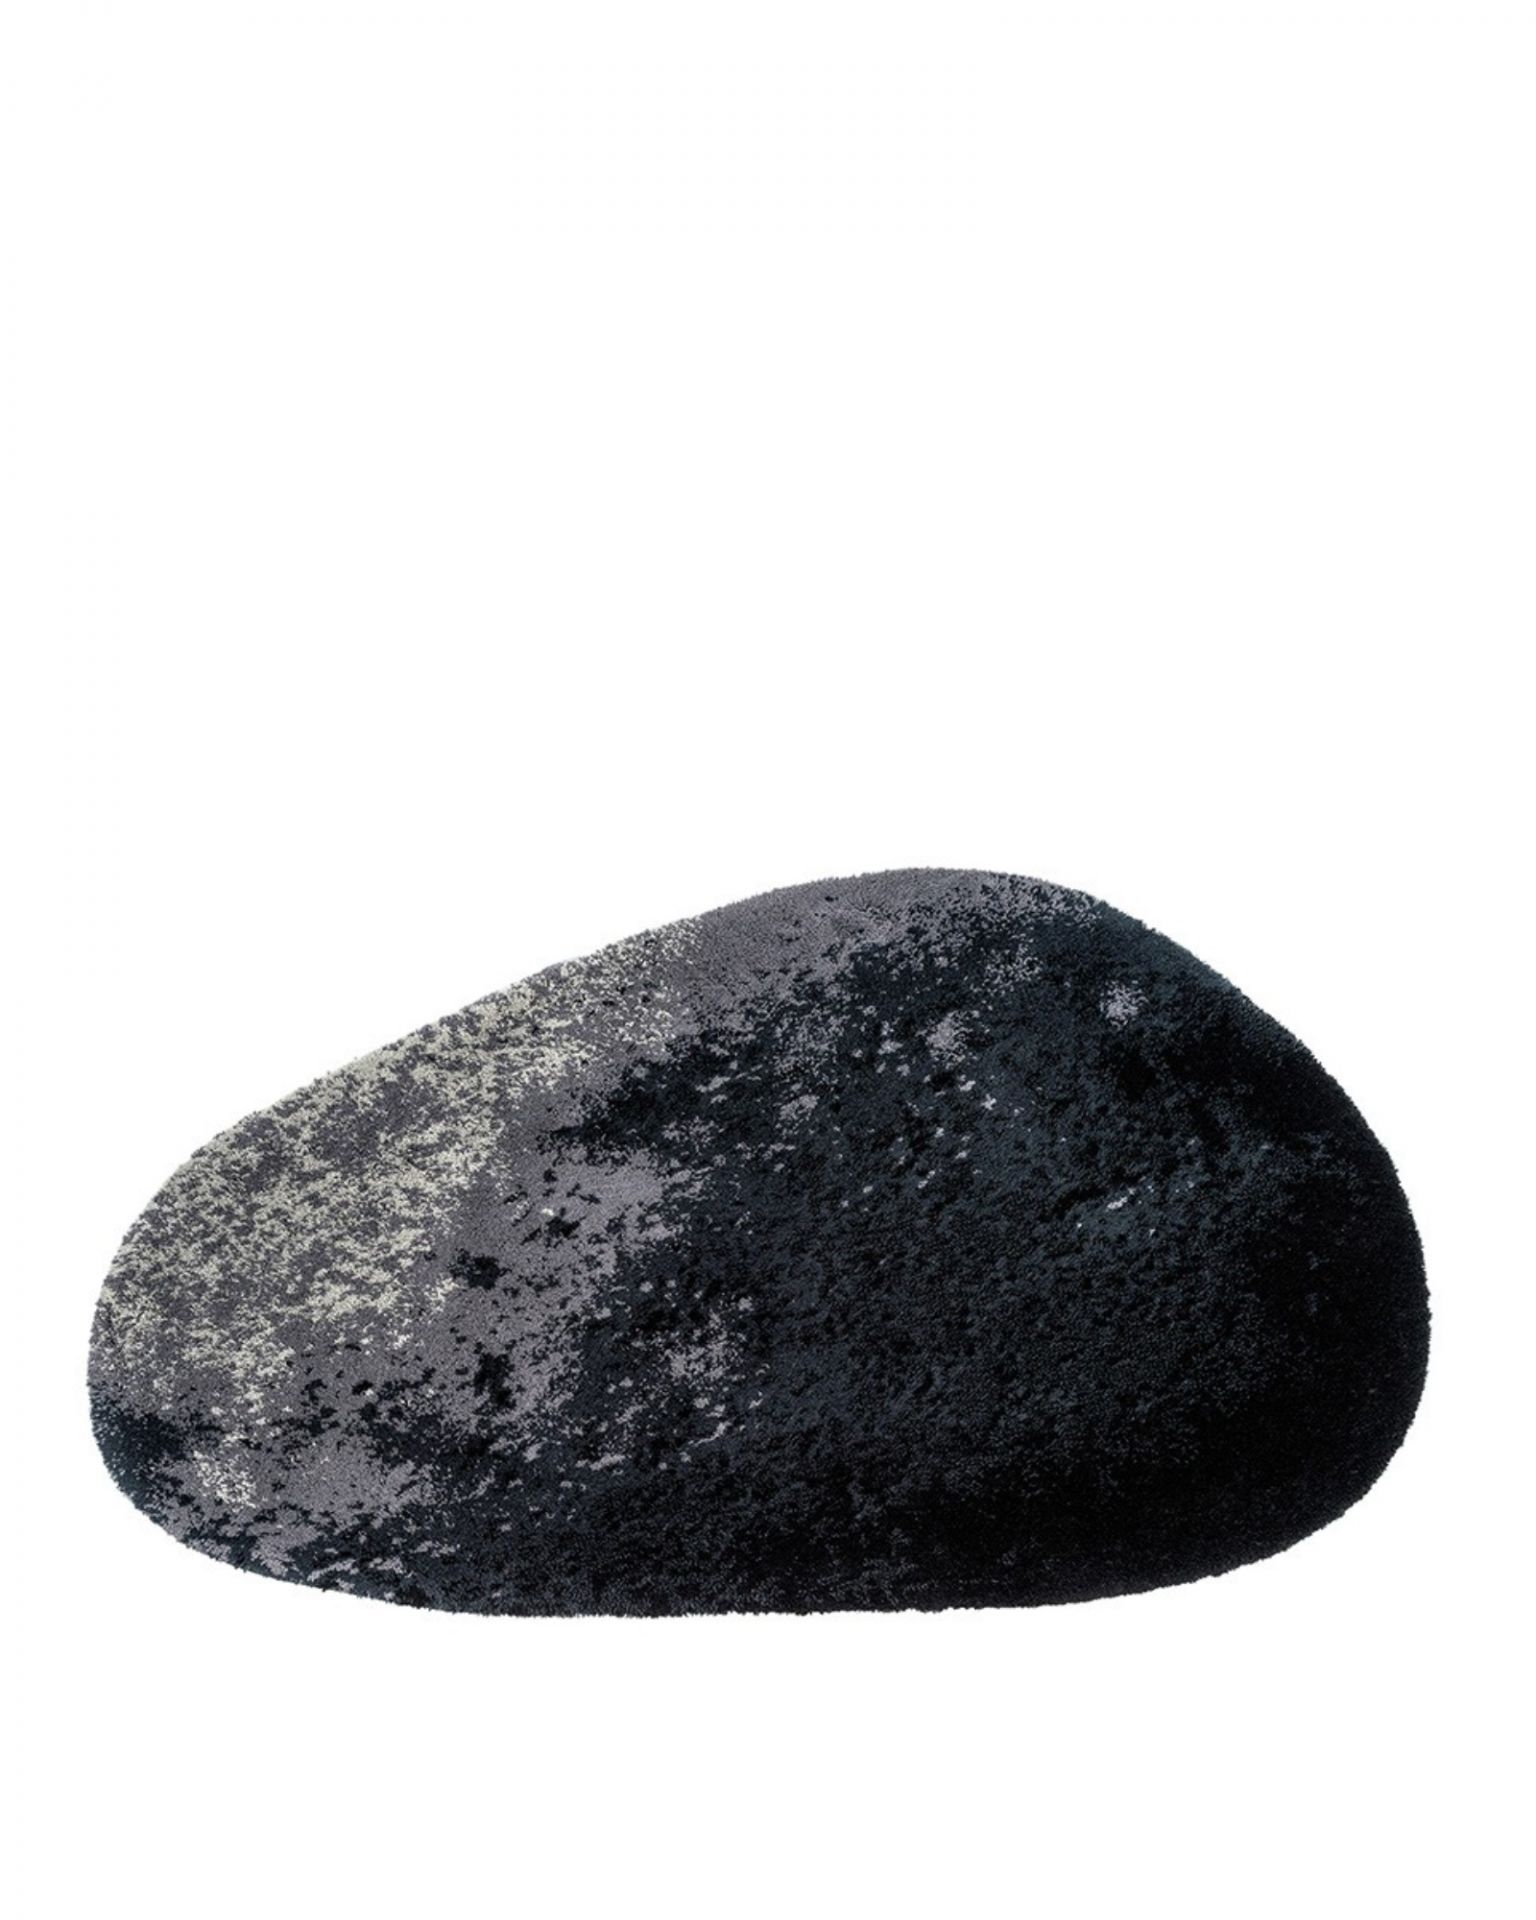 Reyskens Slaapcomfort - Abyss Habidecor Stone Black